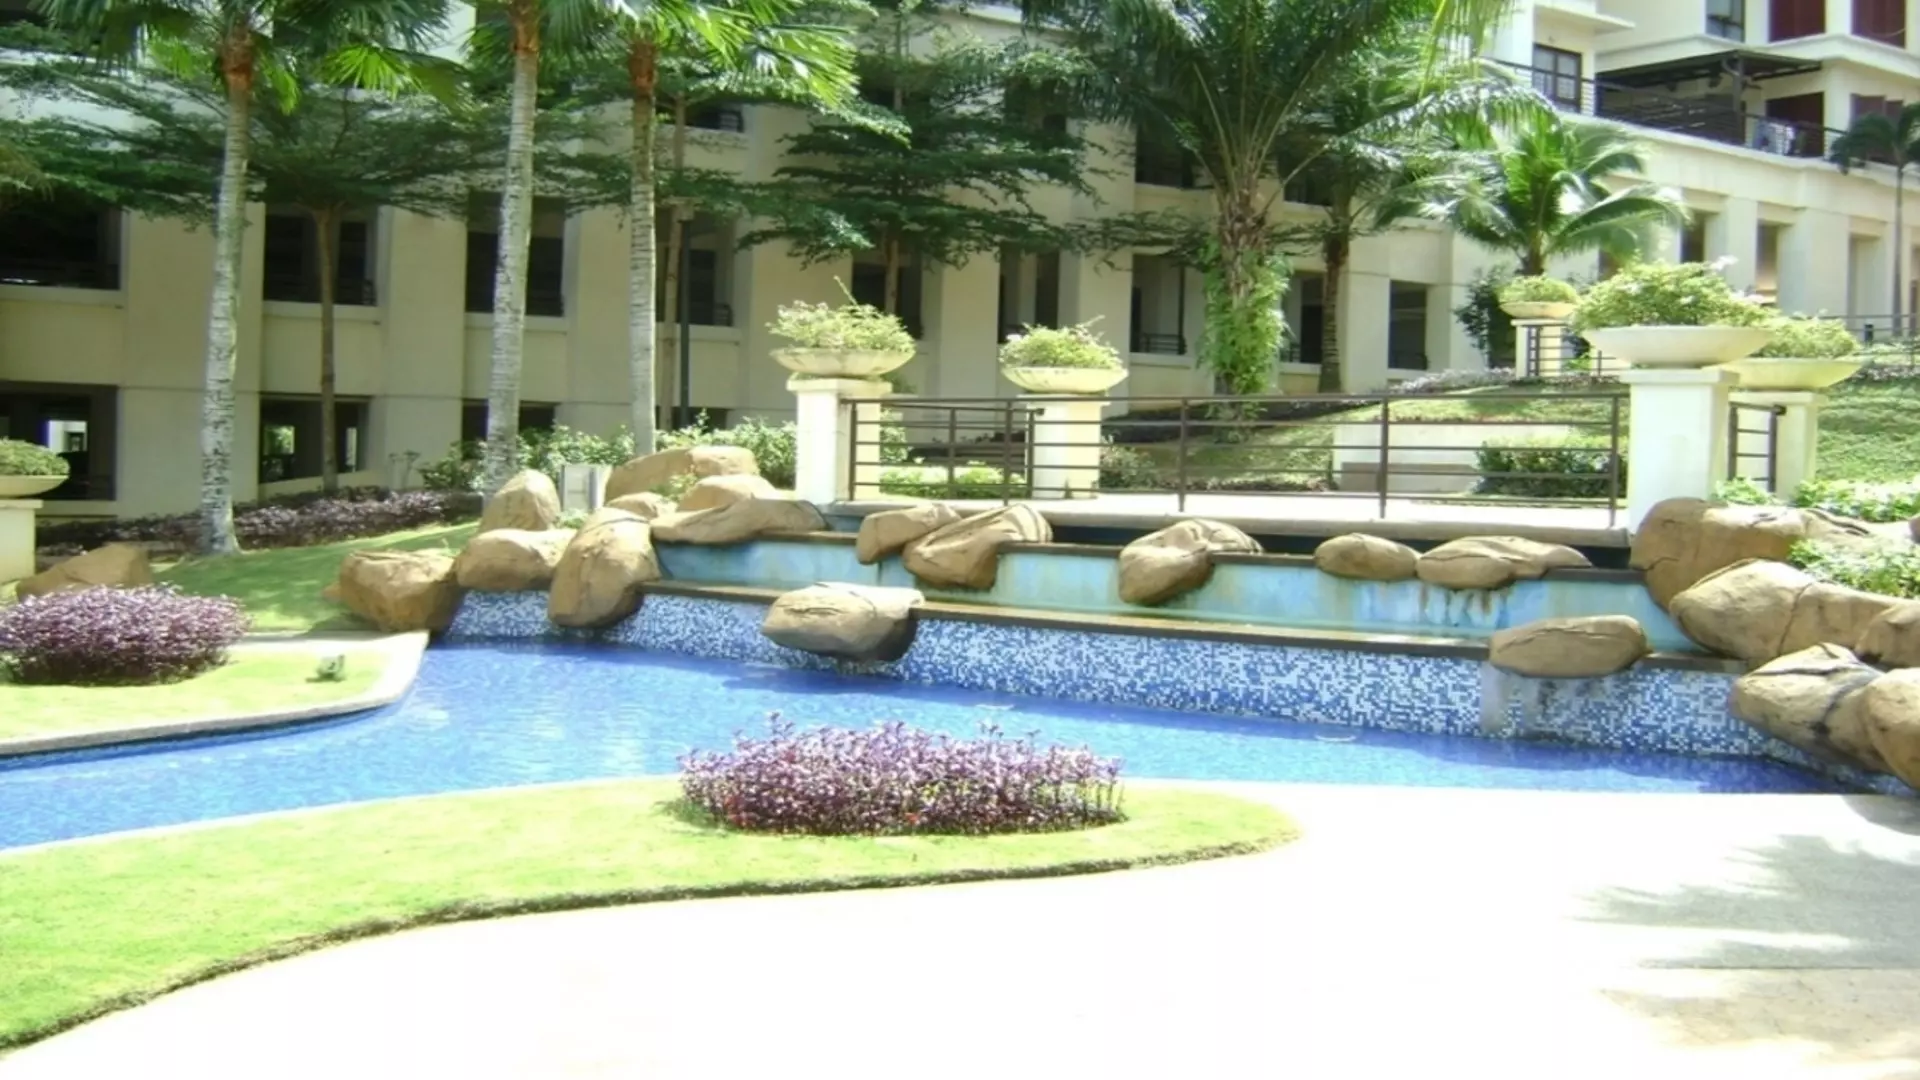 Condominium @ Surian Condominium, Mutiara Damansara, Petaling Jaya, Selangor for Auction 6